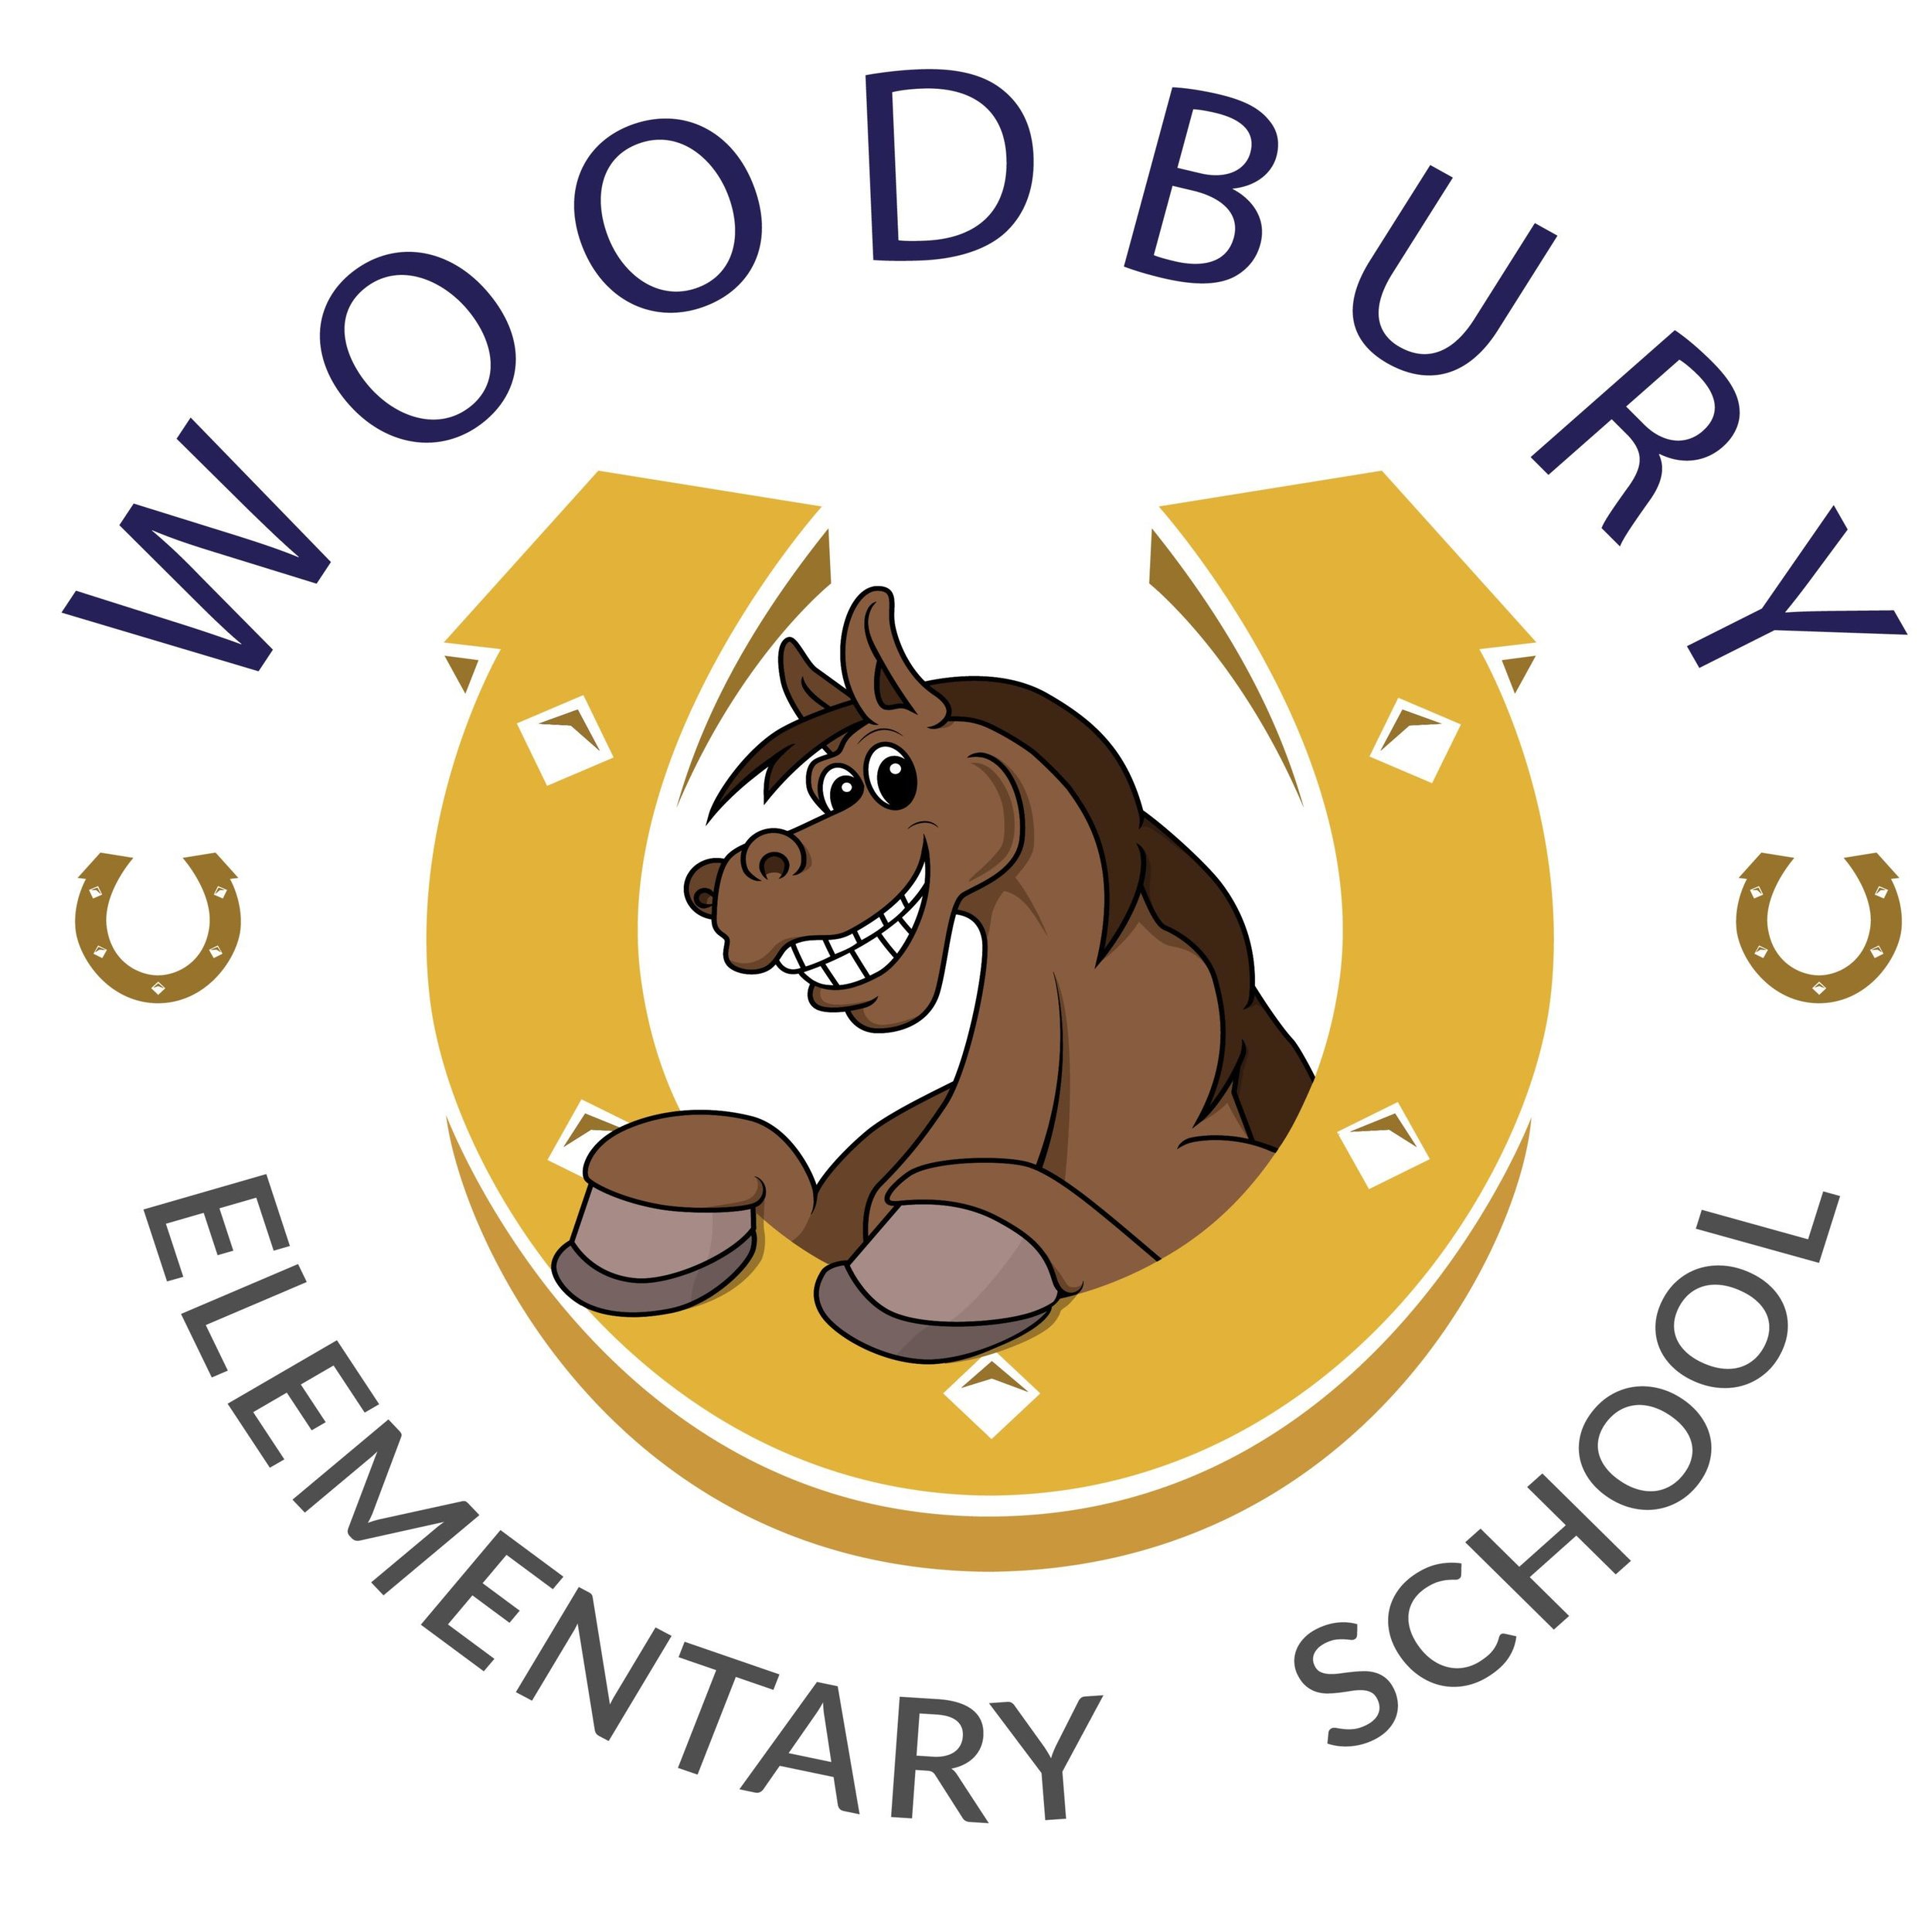 Woodbury Logo.jpg